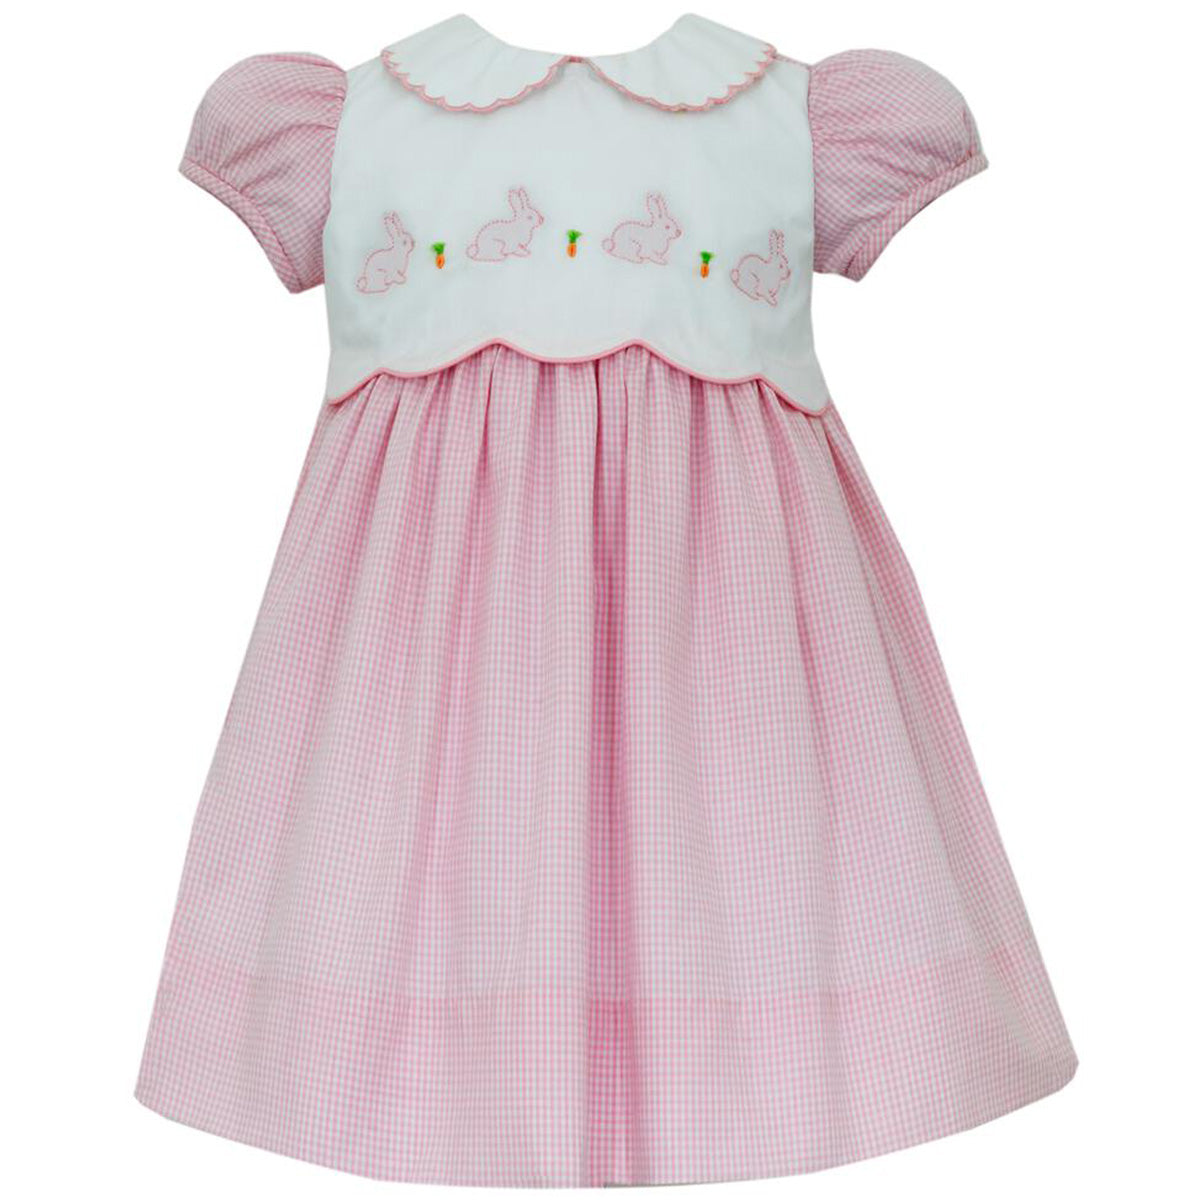 Bunnies Pink Gingham Dress w/ White Bodice